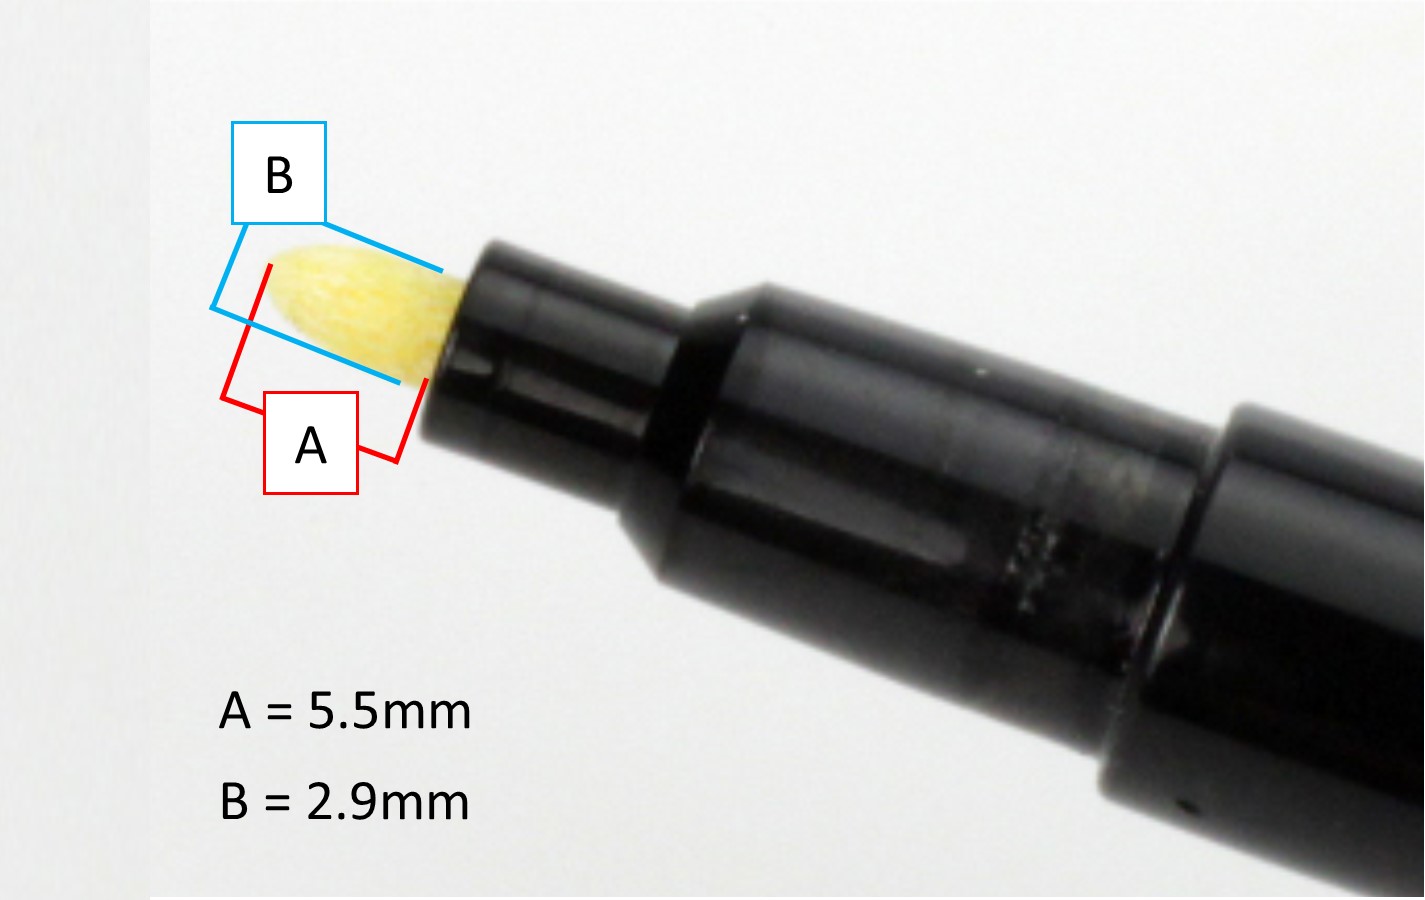 PAP PEN LIQUID BLOCKER Mini hydrophobic barrier Pap Pen Tip by Daido Sangyo